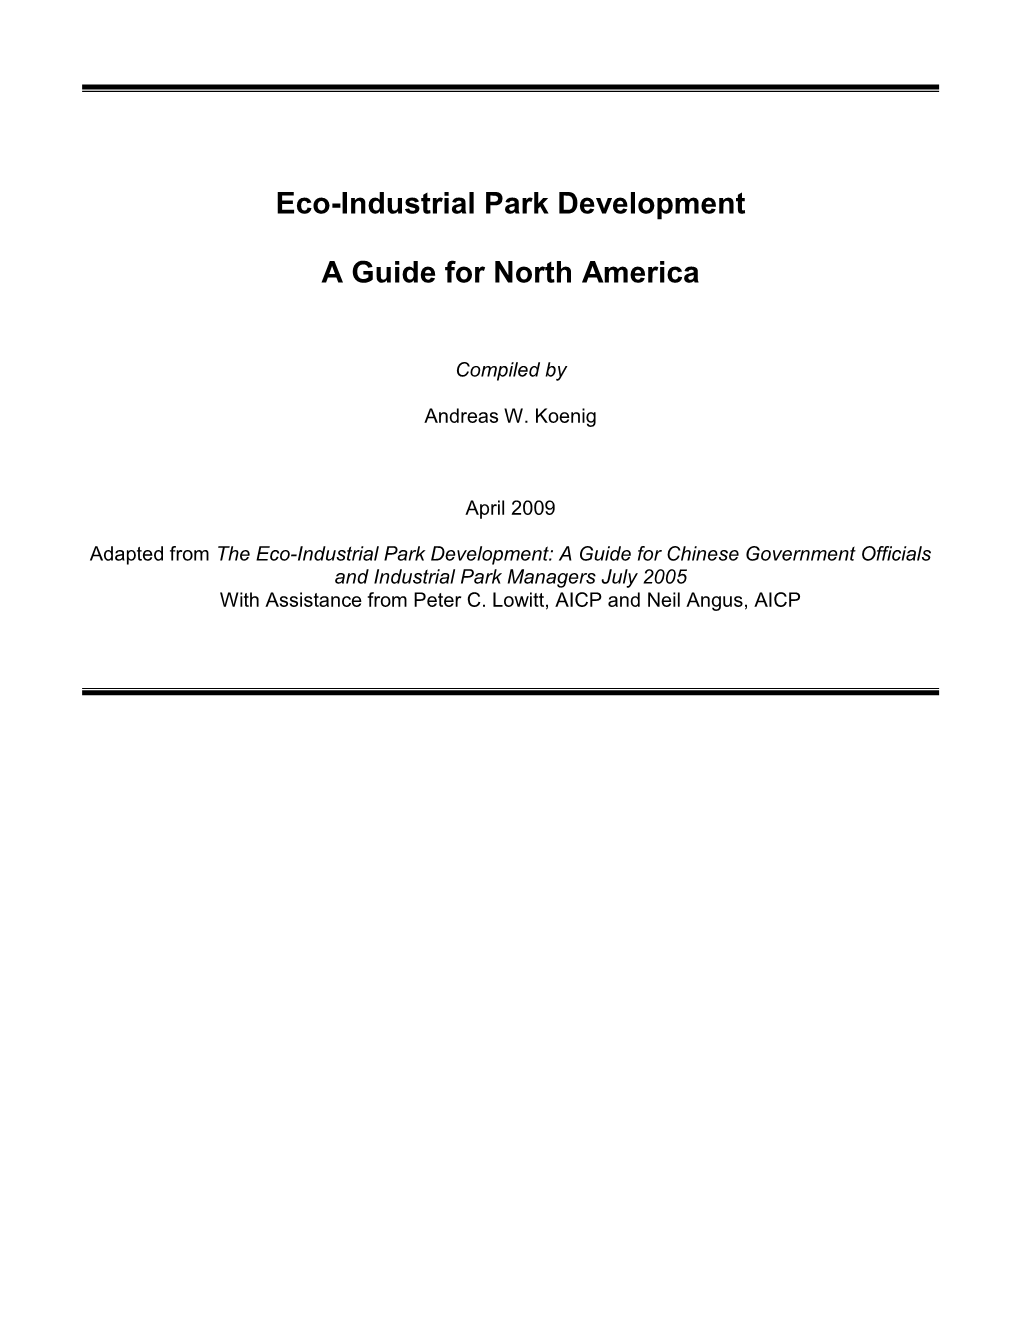 Eco-Industrial Park Development: a Guide for North American Officials, Koenig Et Al